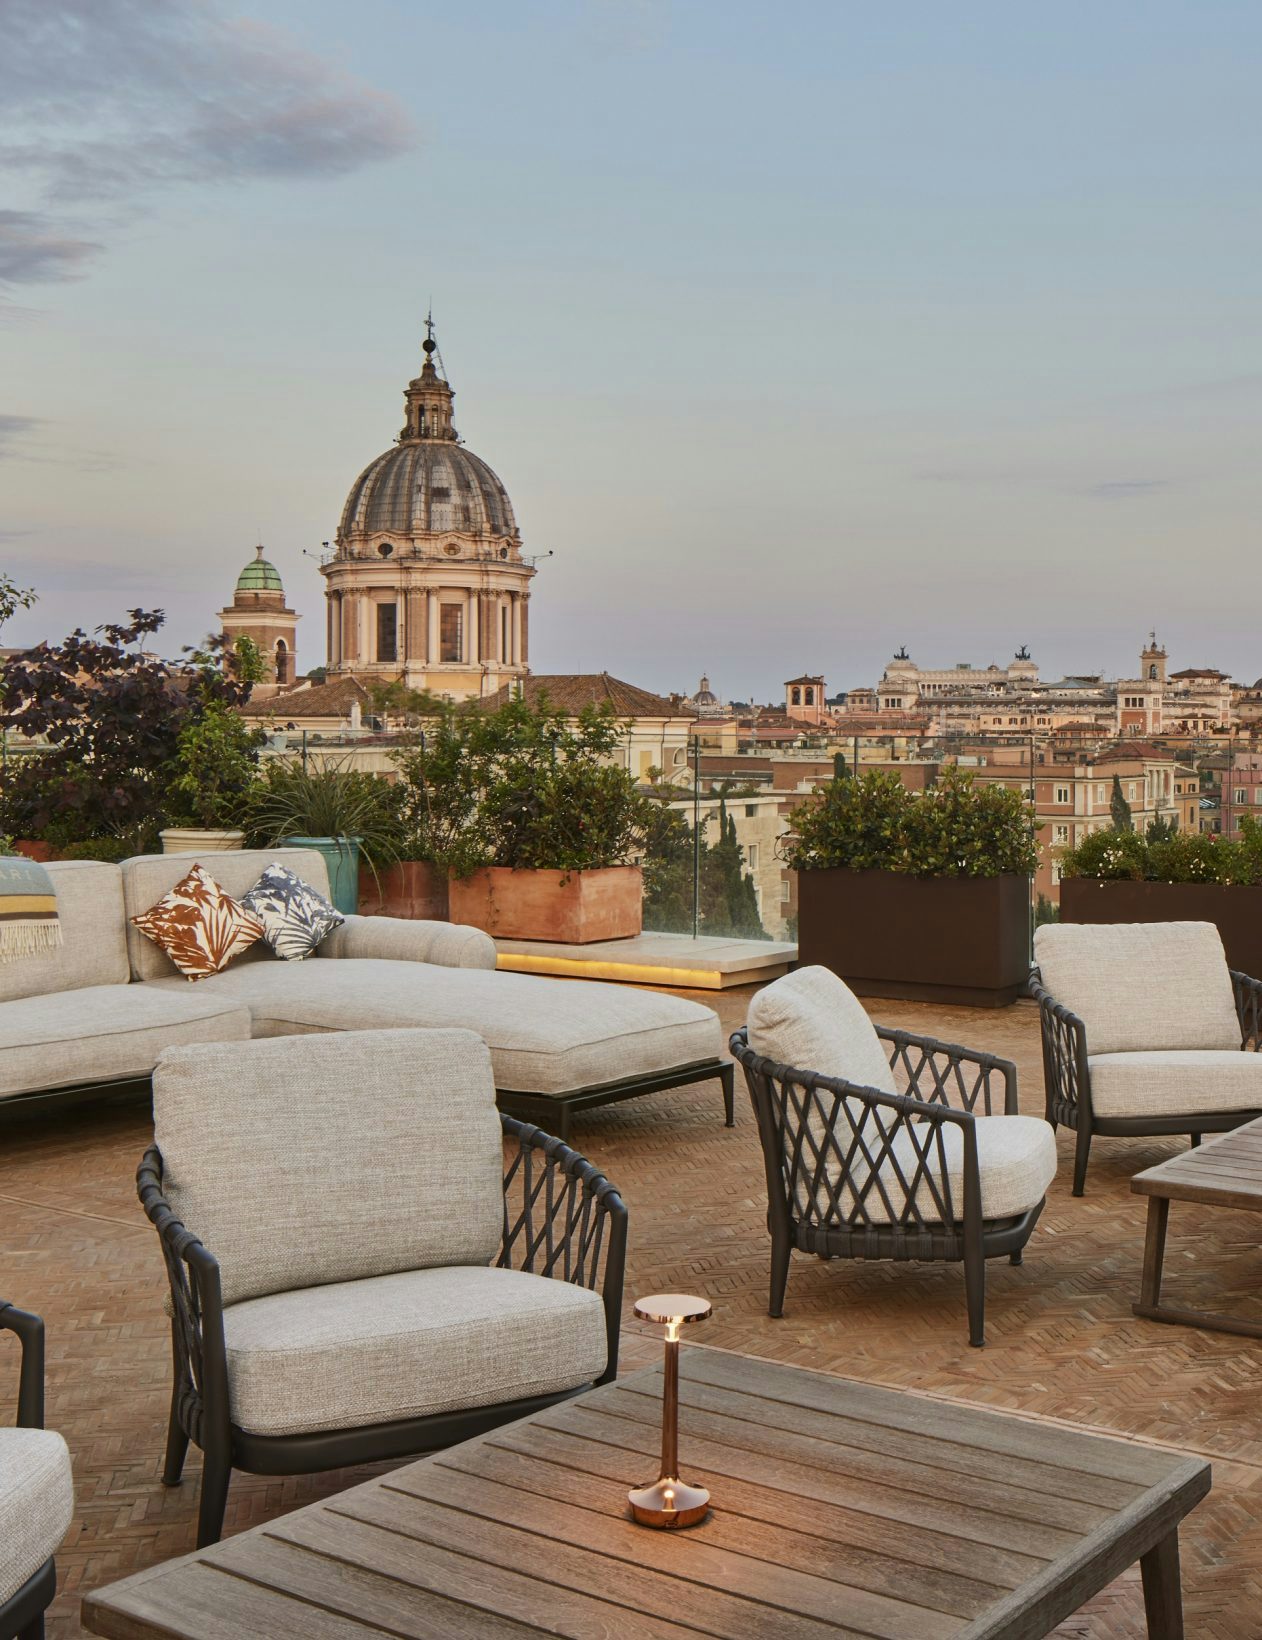 Bulgari Opens Its Ninth Hotel in Rome